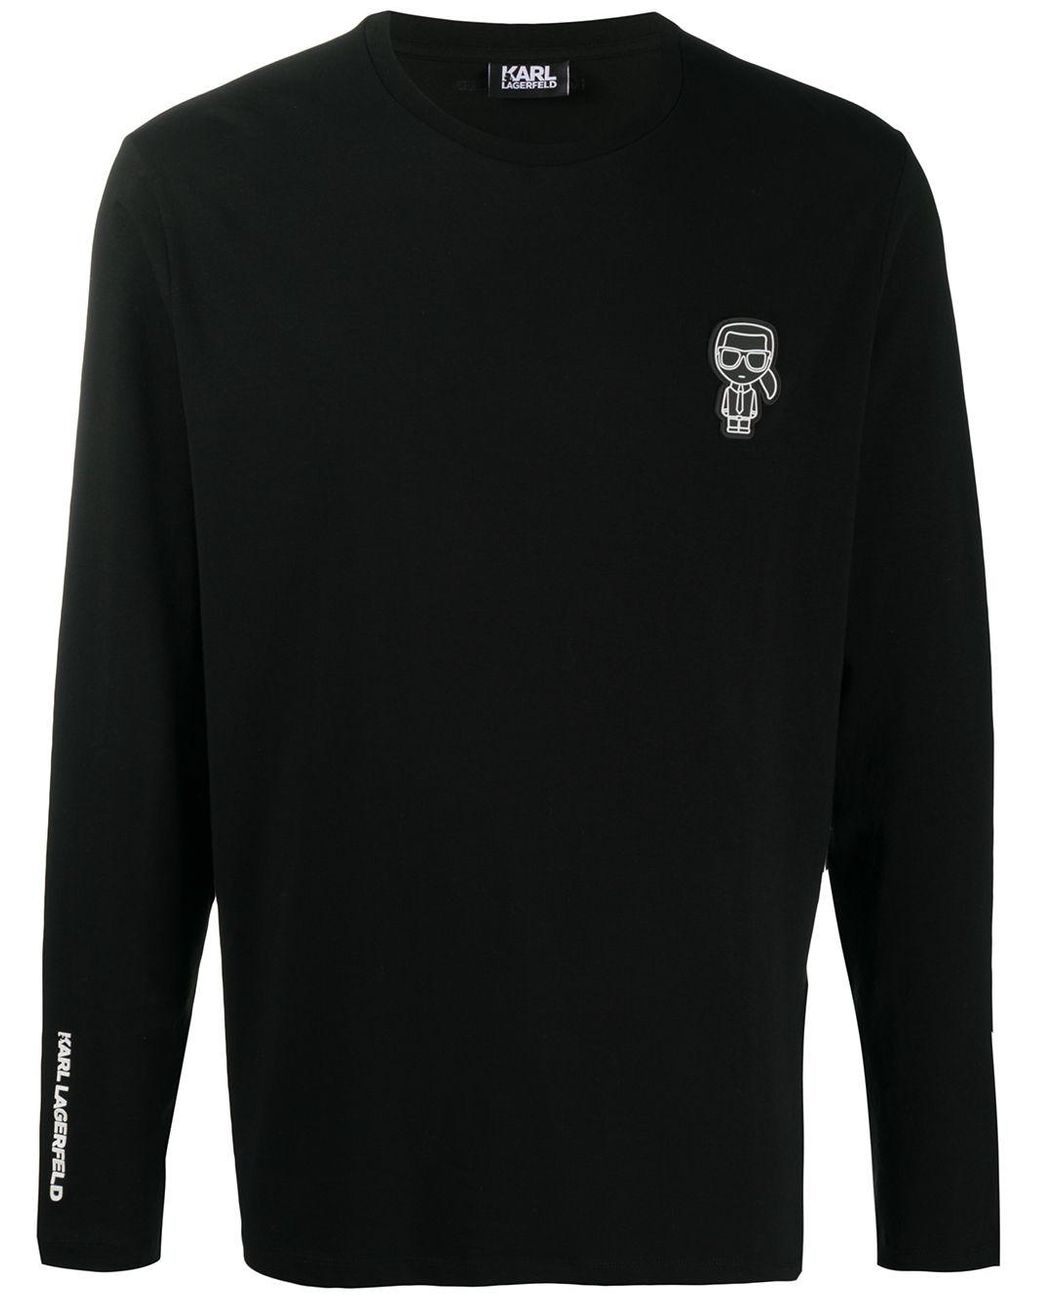 Karl Lagerfeld Cotton Long Sleeve T-shirt in Black for Men - Lyst